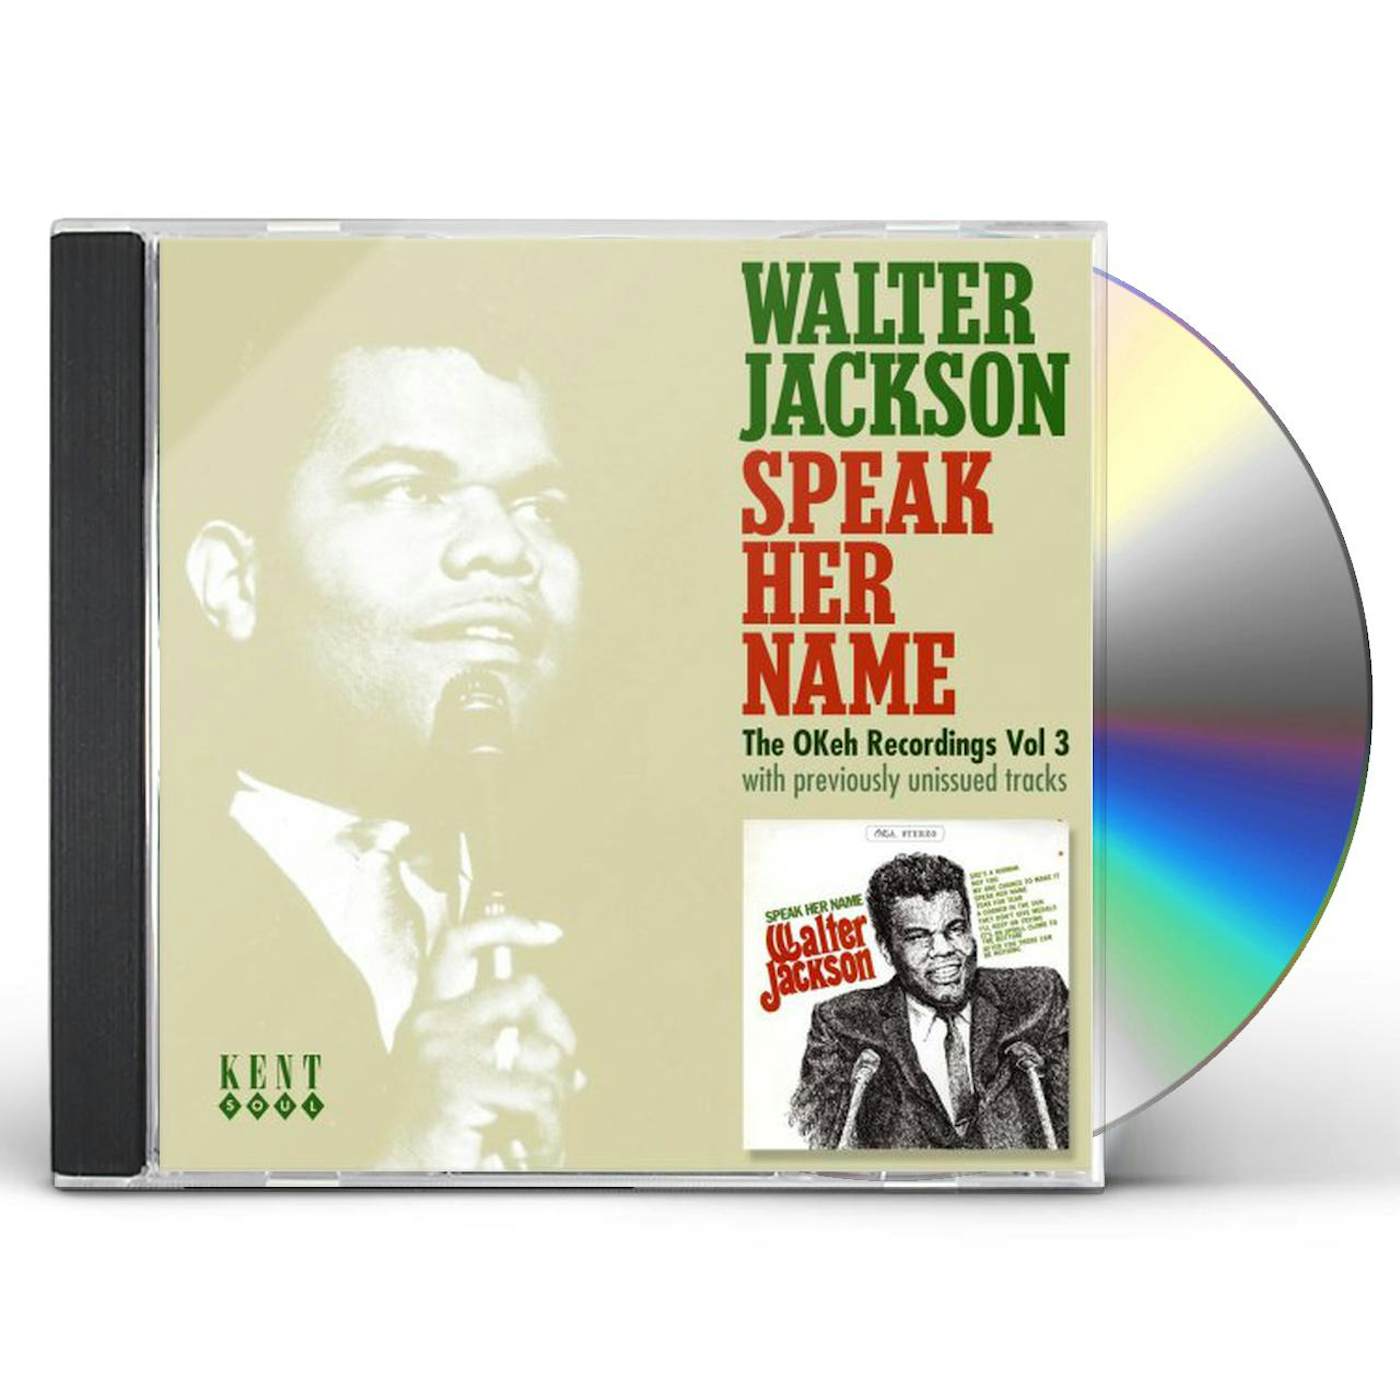 Walter Jackson SPEAK HER NAME-THE OKEH RECORDINGS 3 CD